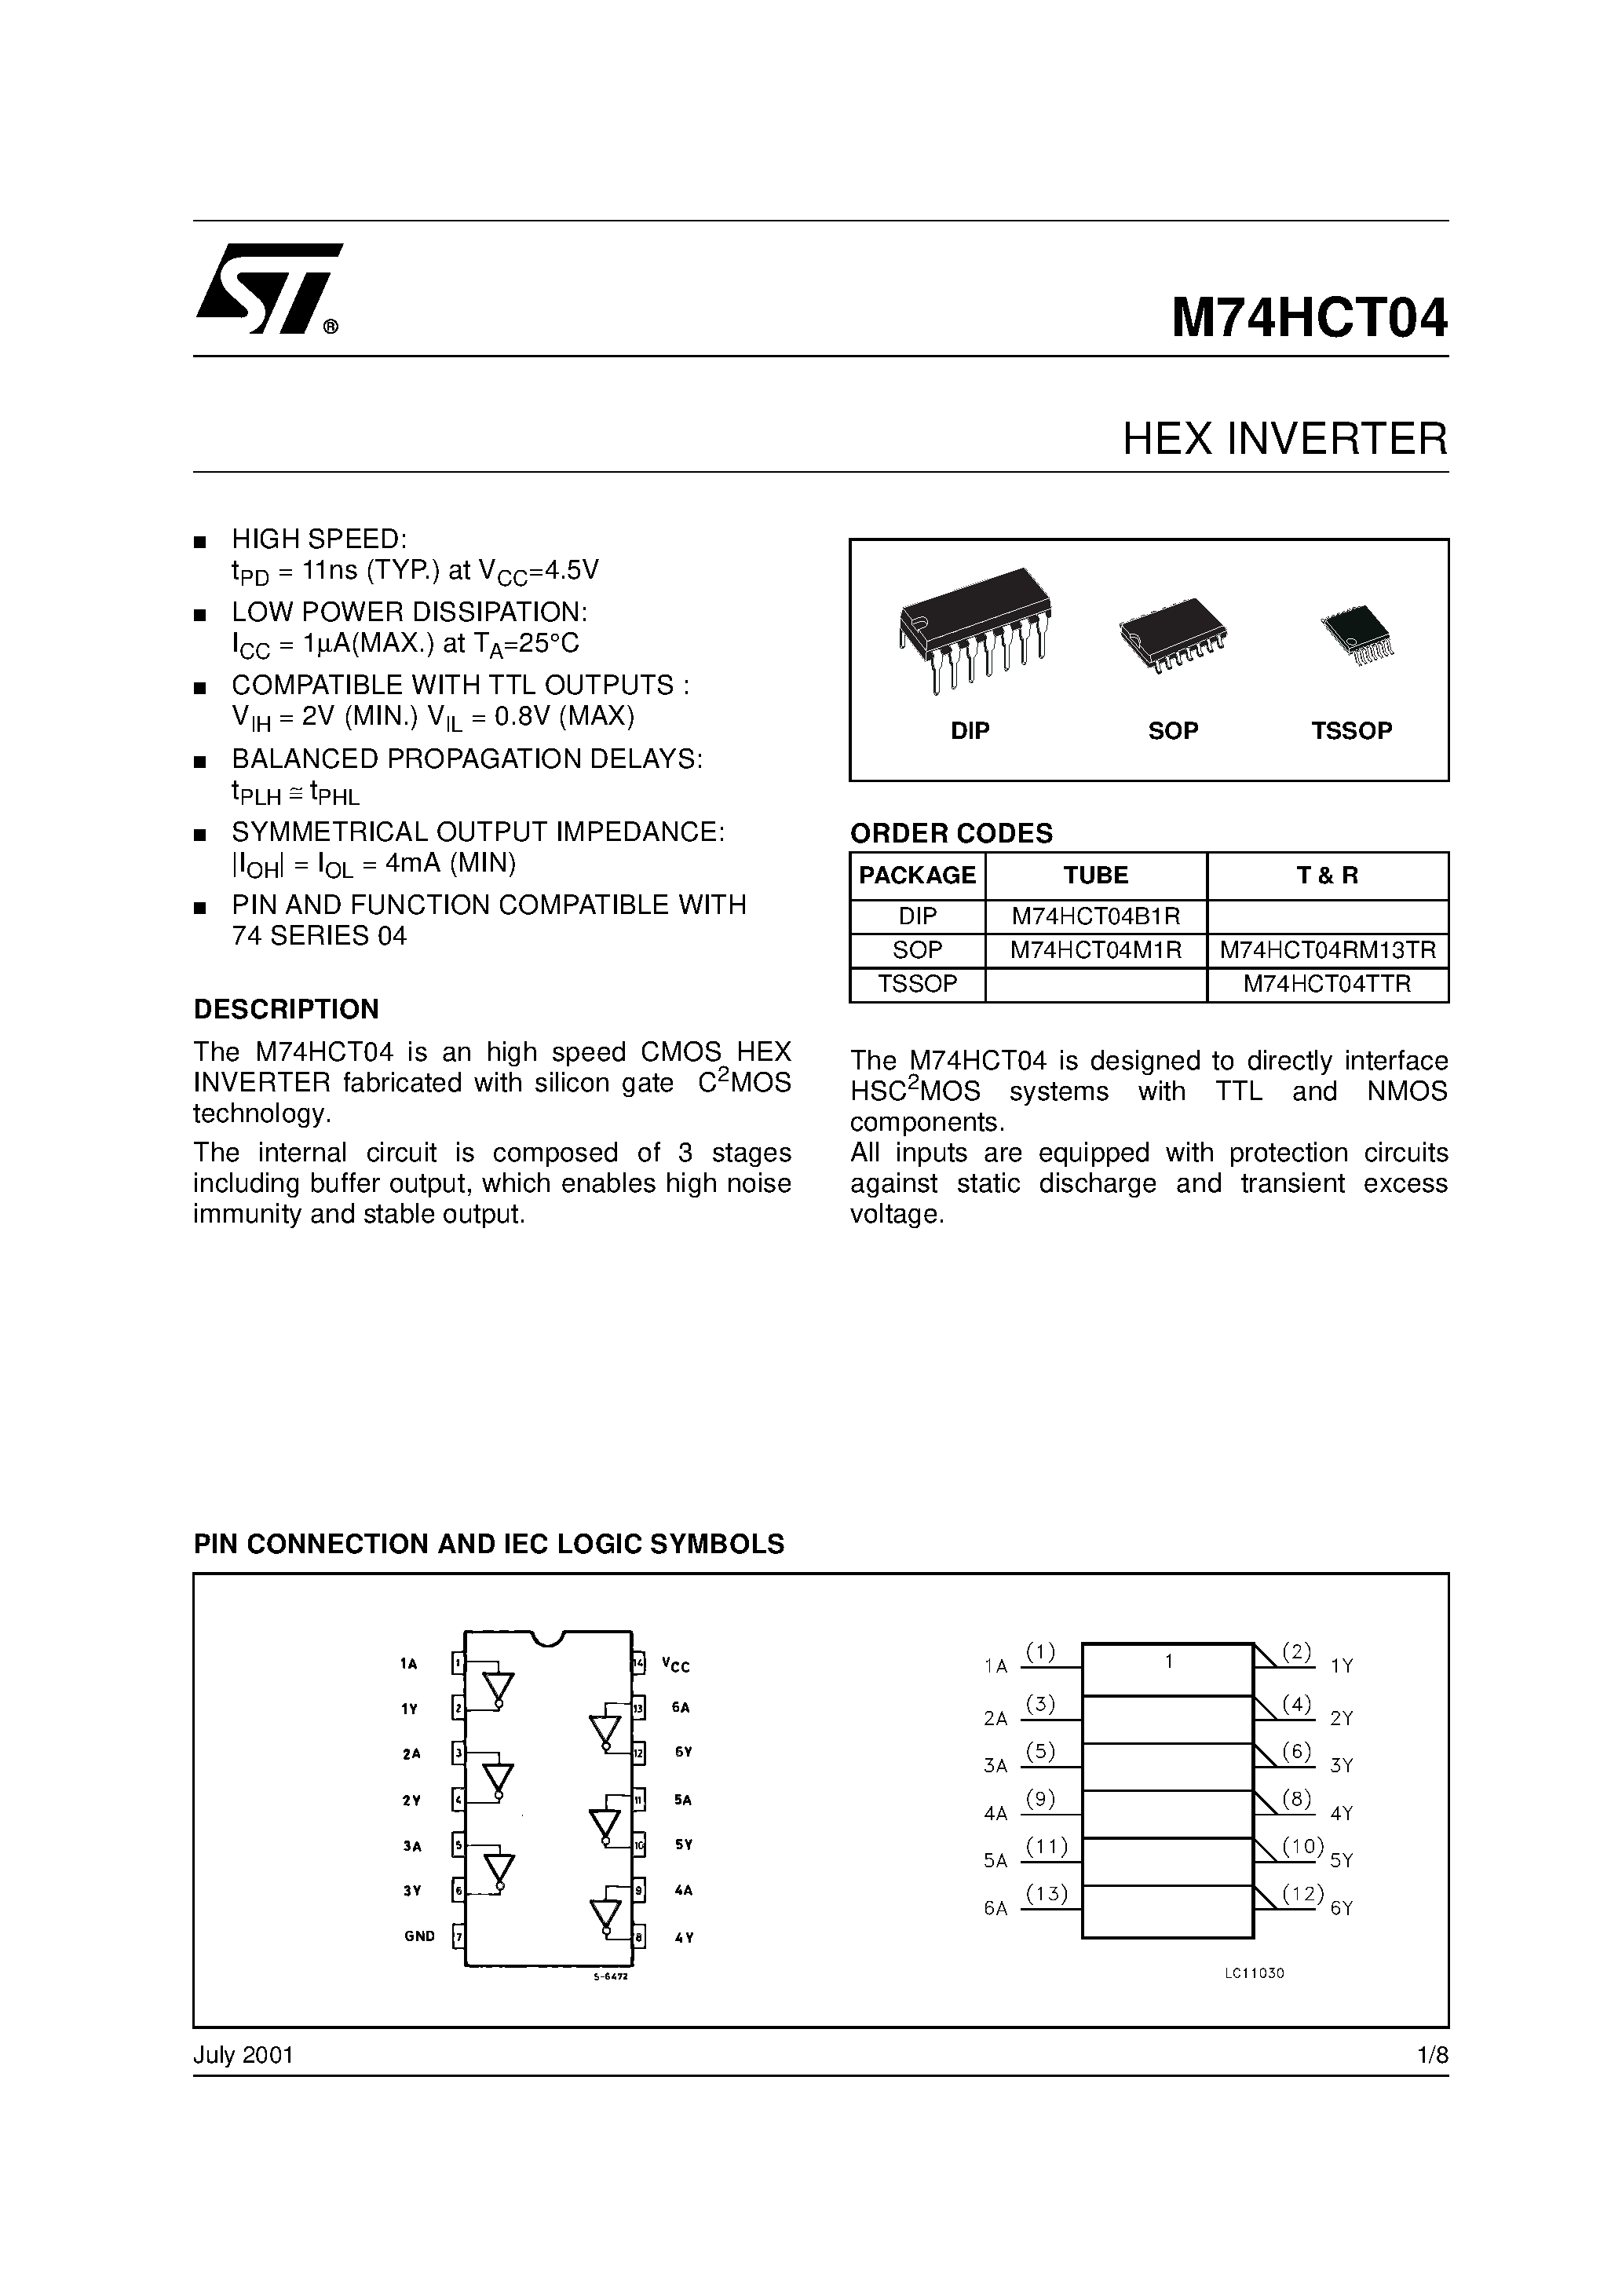 Datasheet M74HCT04 - HEX INVERTER page 1